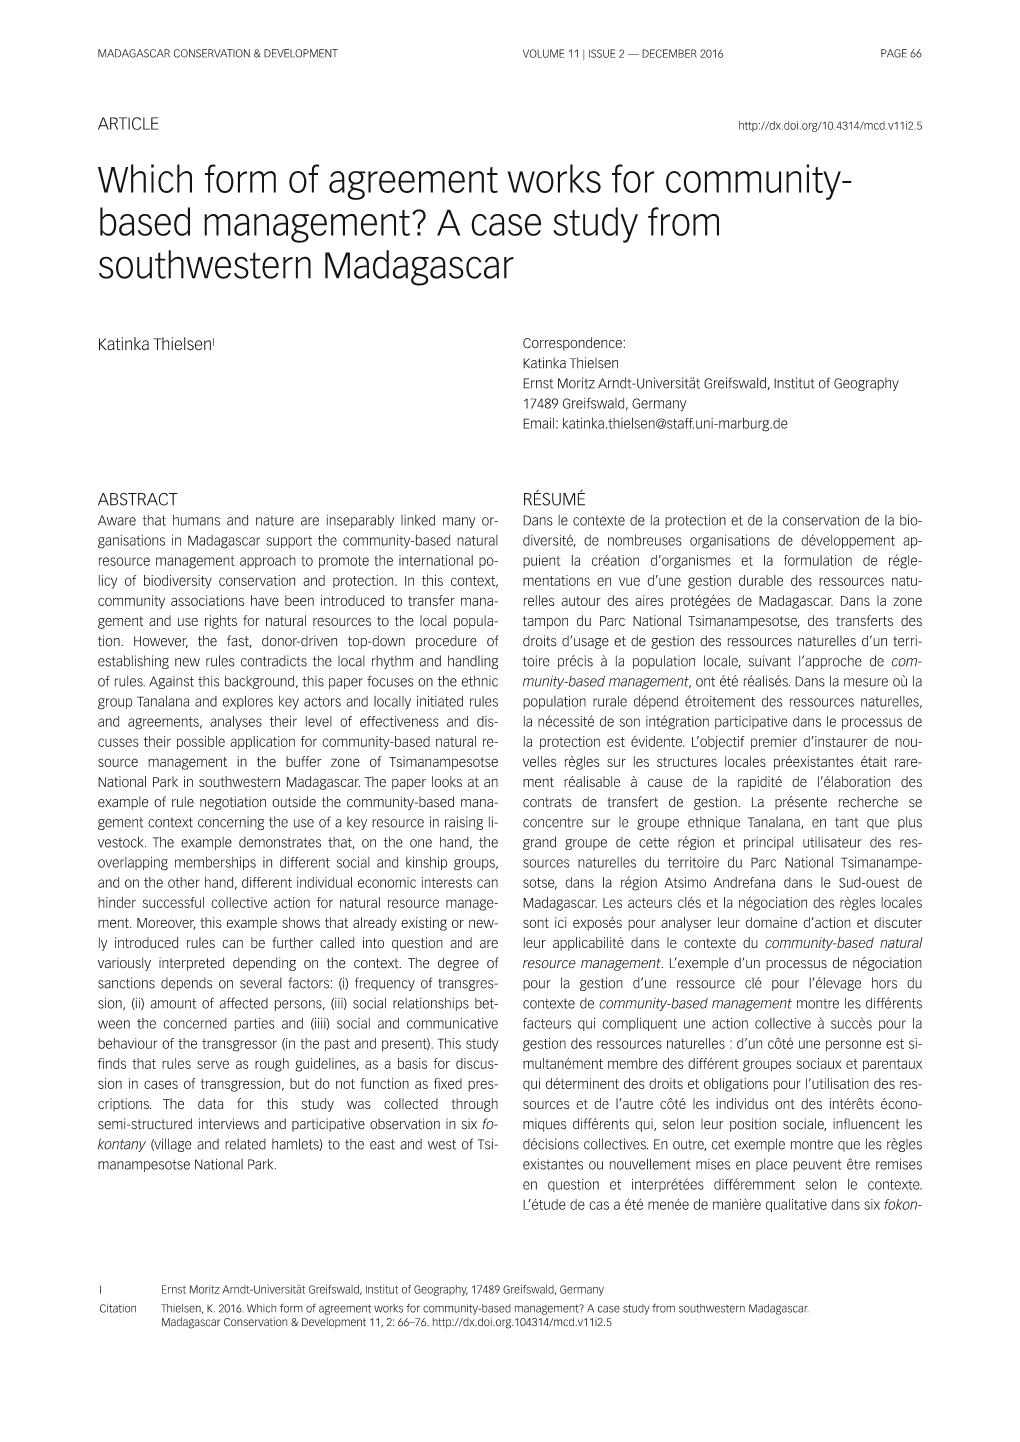 Based Management? a Case Study from Southwestern Madagascar